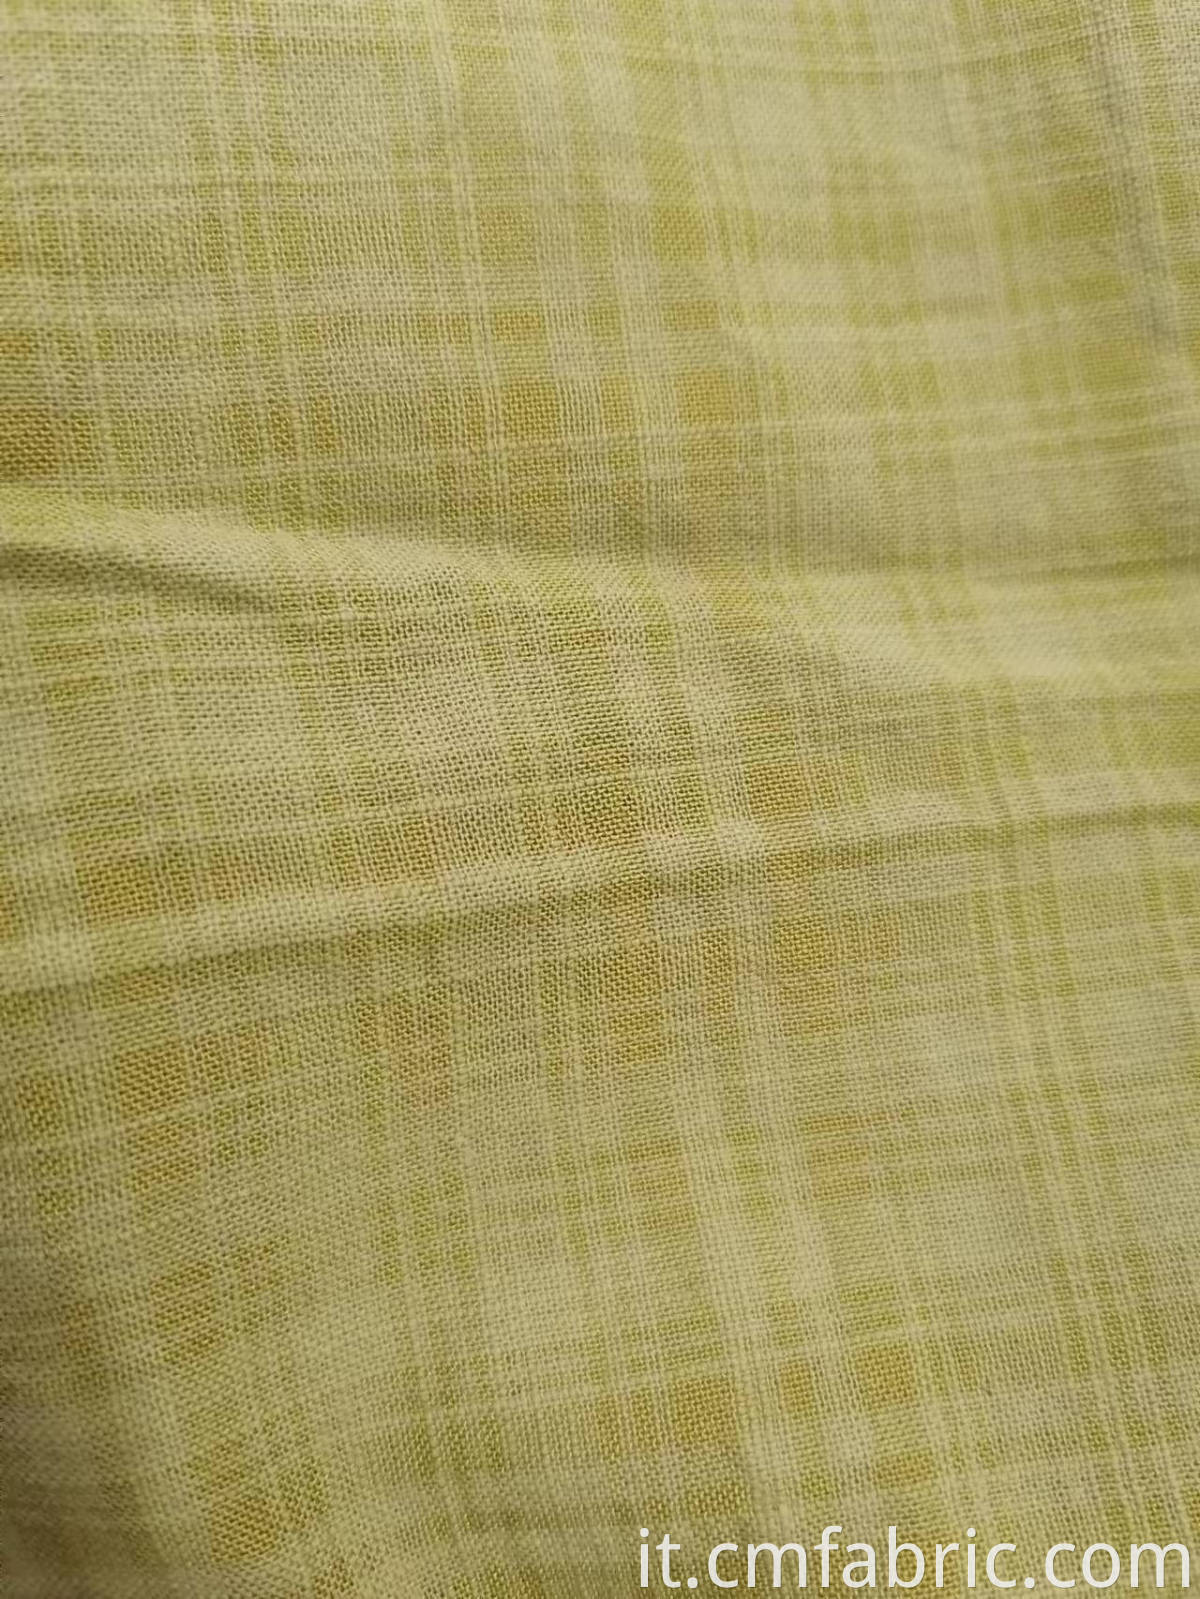 Cotton rayon plain dyed check fabric